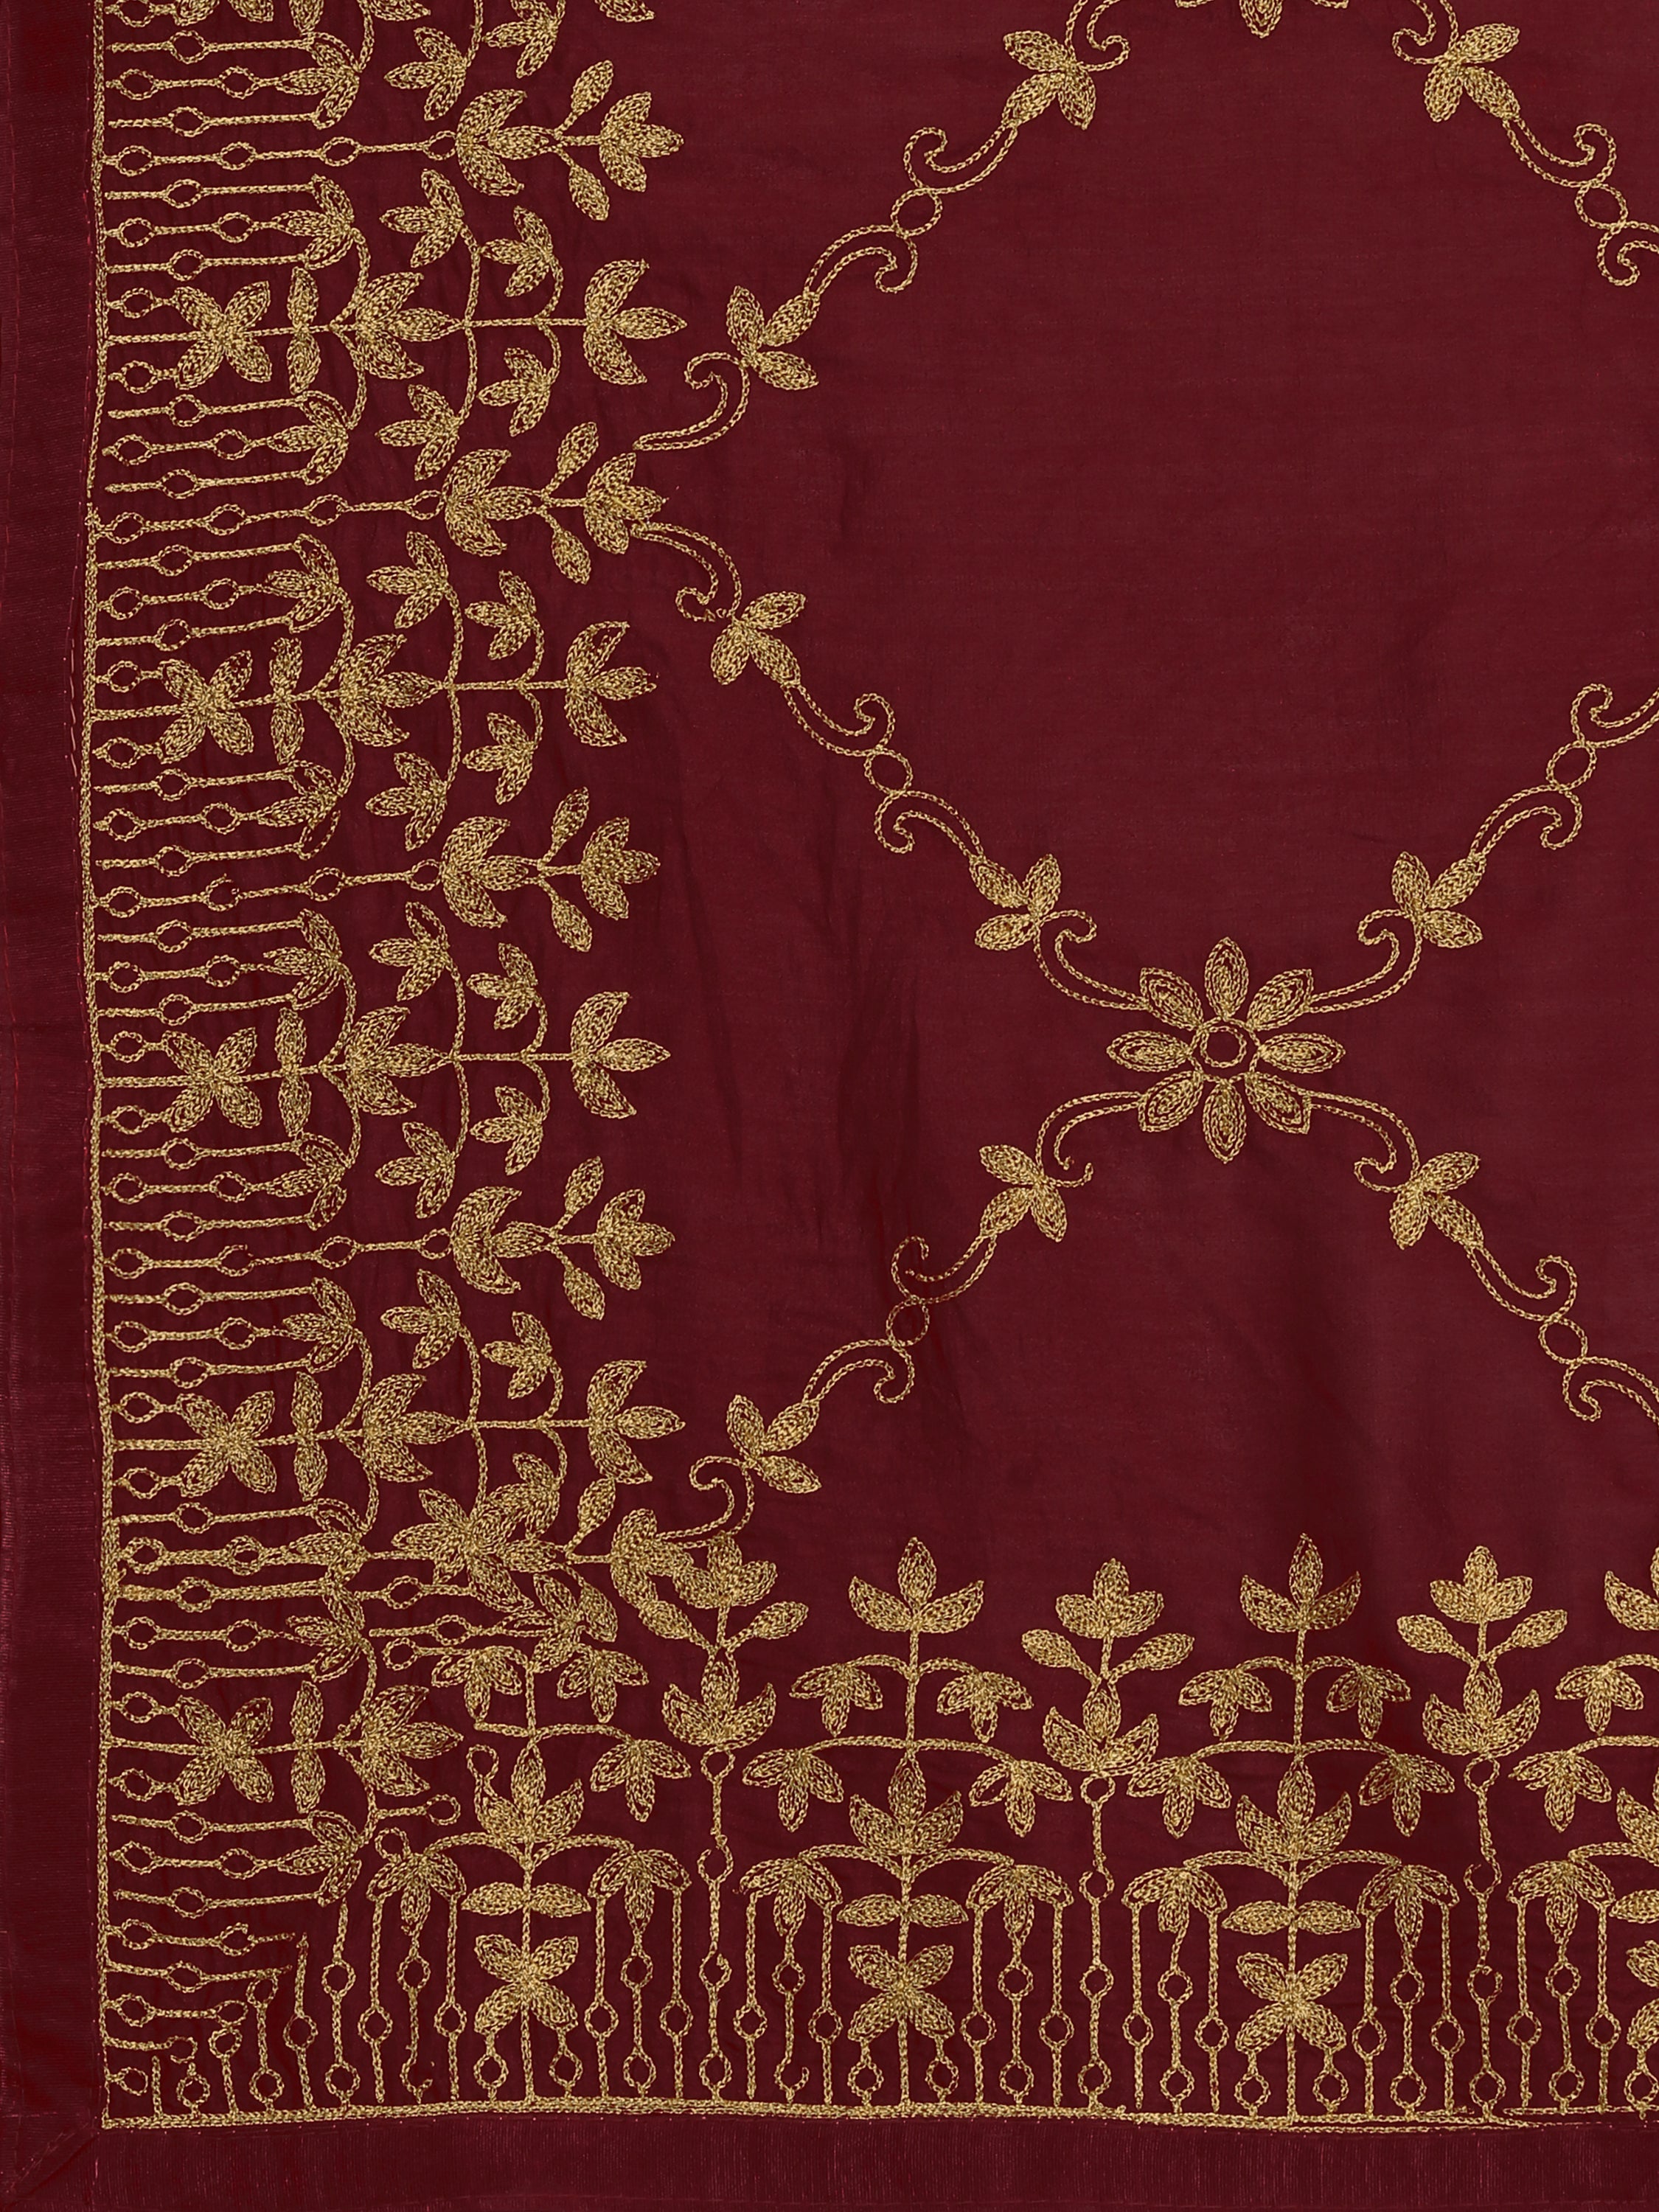 Women's Silk Blend Sari Having Ahir Embroider Detailed Pallu With Blouse Piece (Maroon) - NIMIDHYA